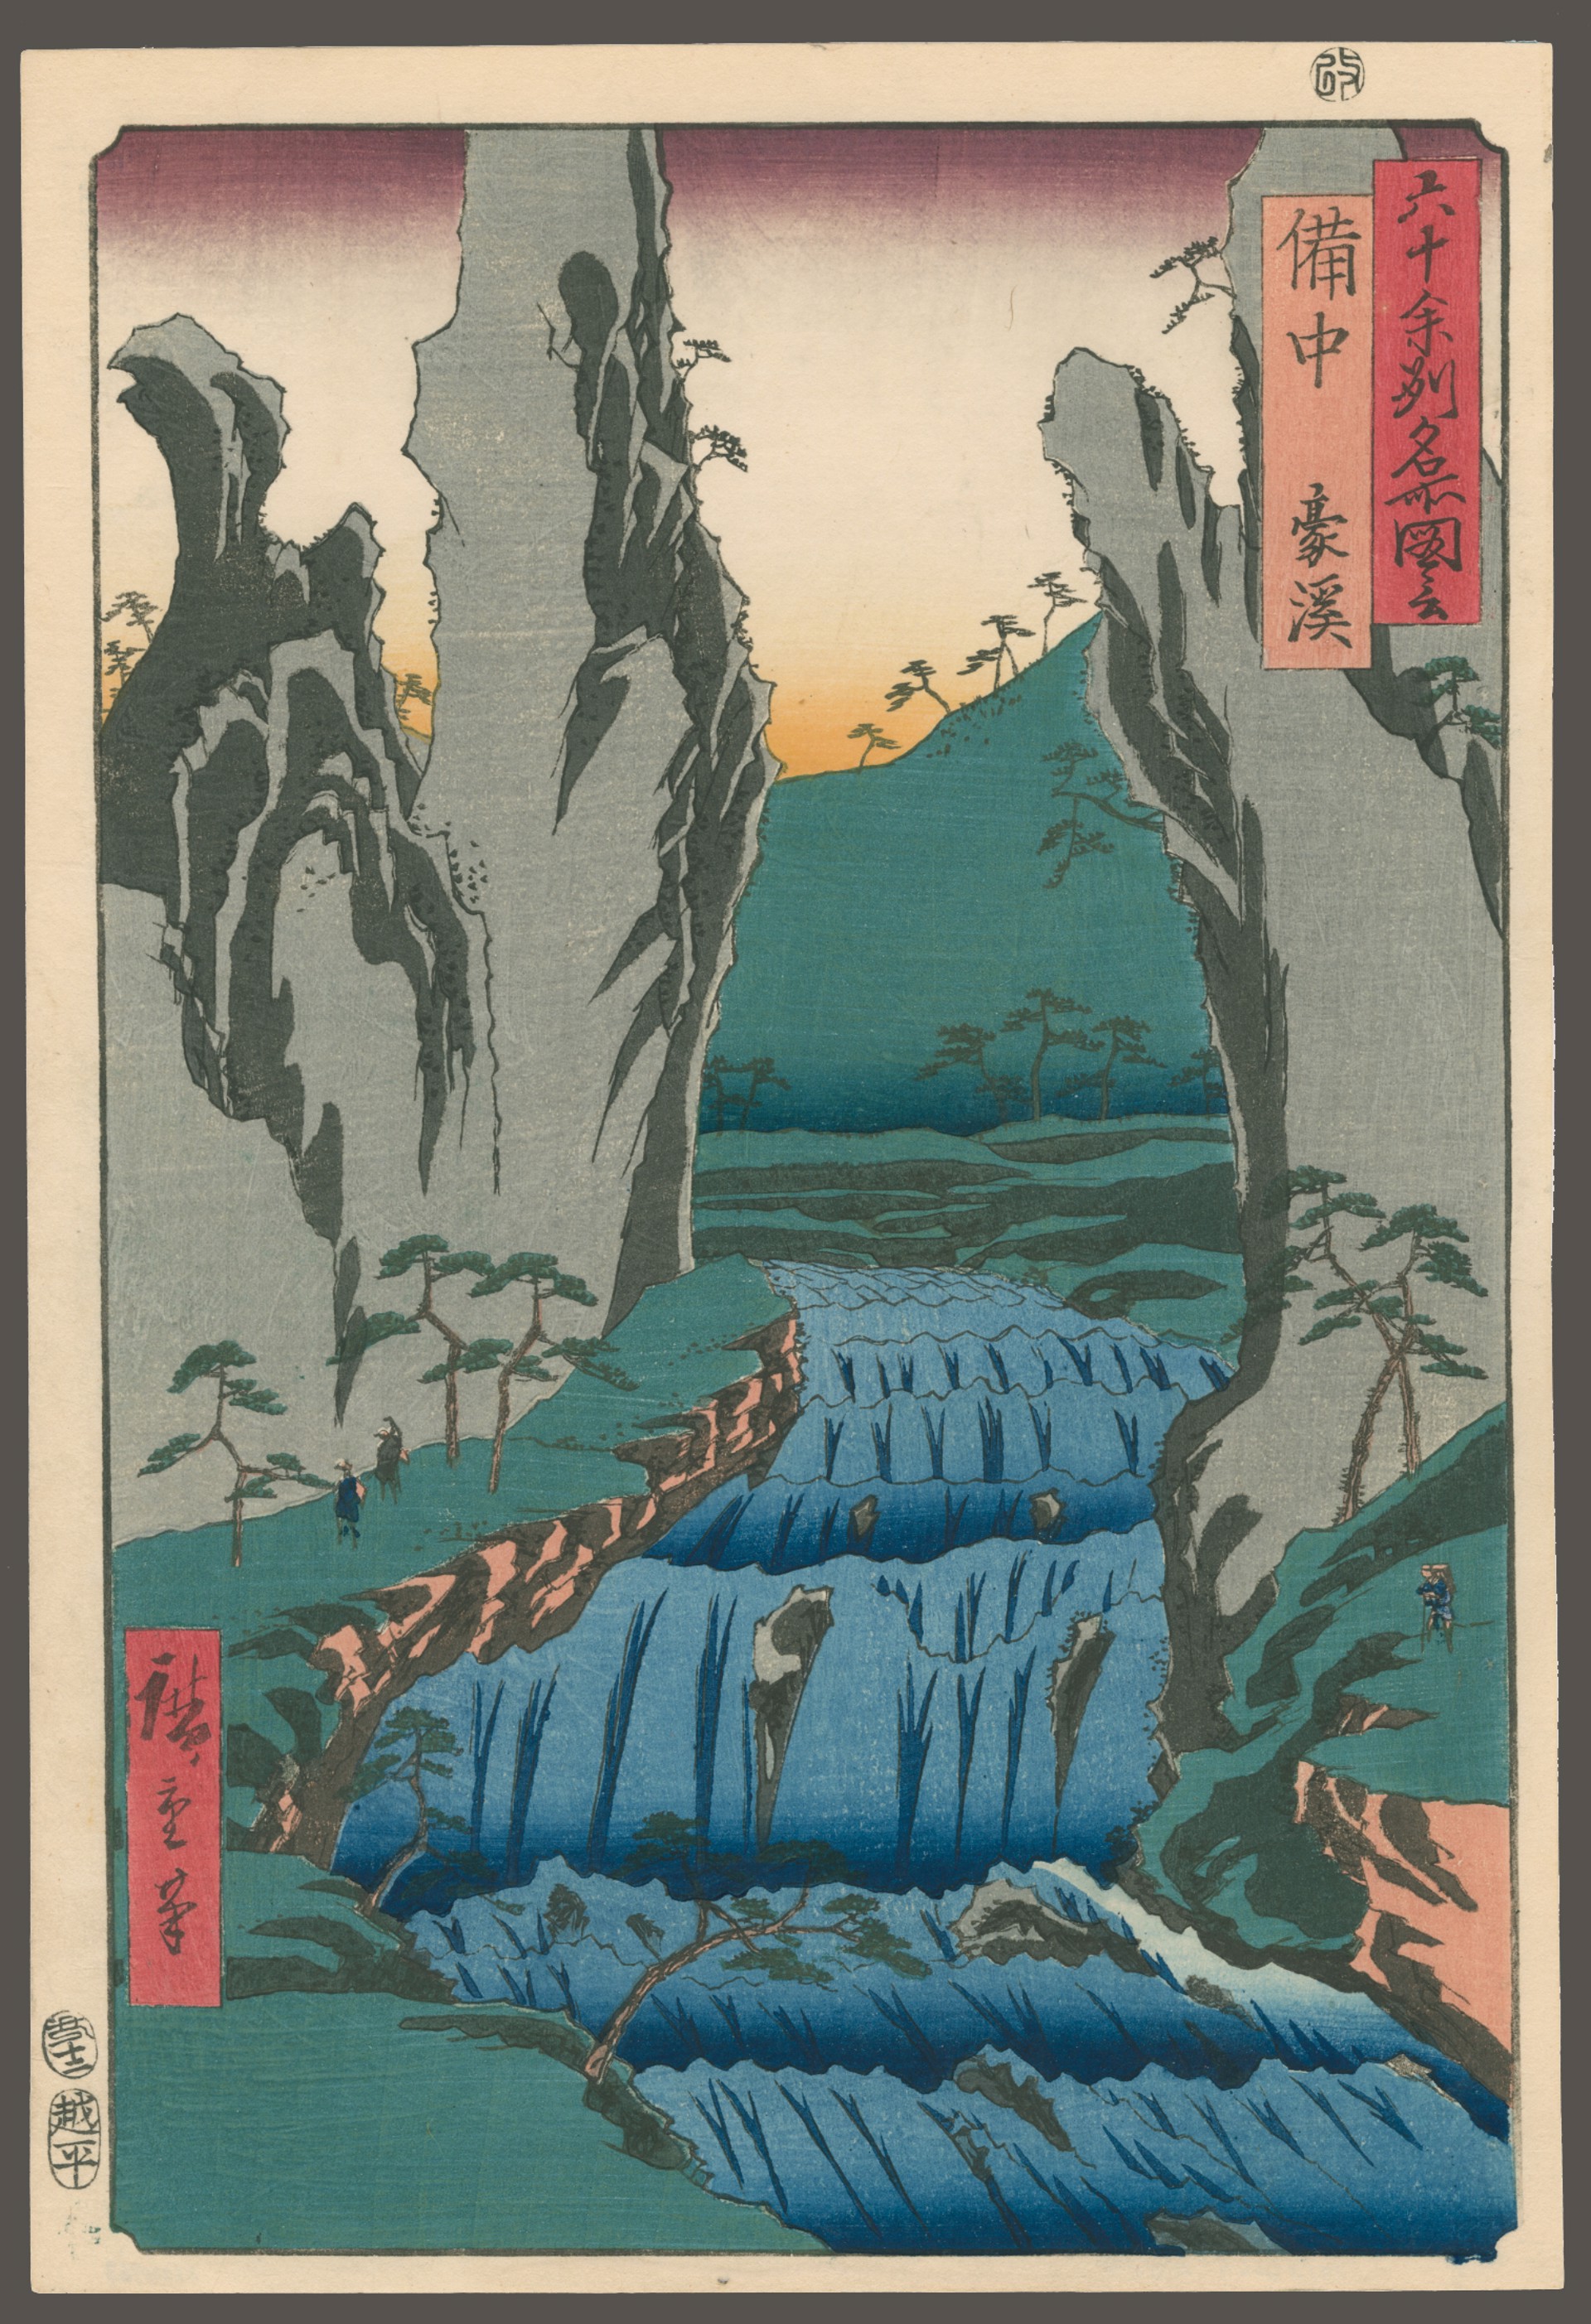 #48 Gokei in Bitchu Province 60 Odd Provinces by Hiroshige